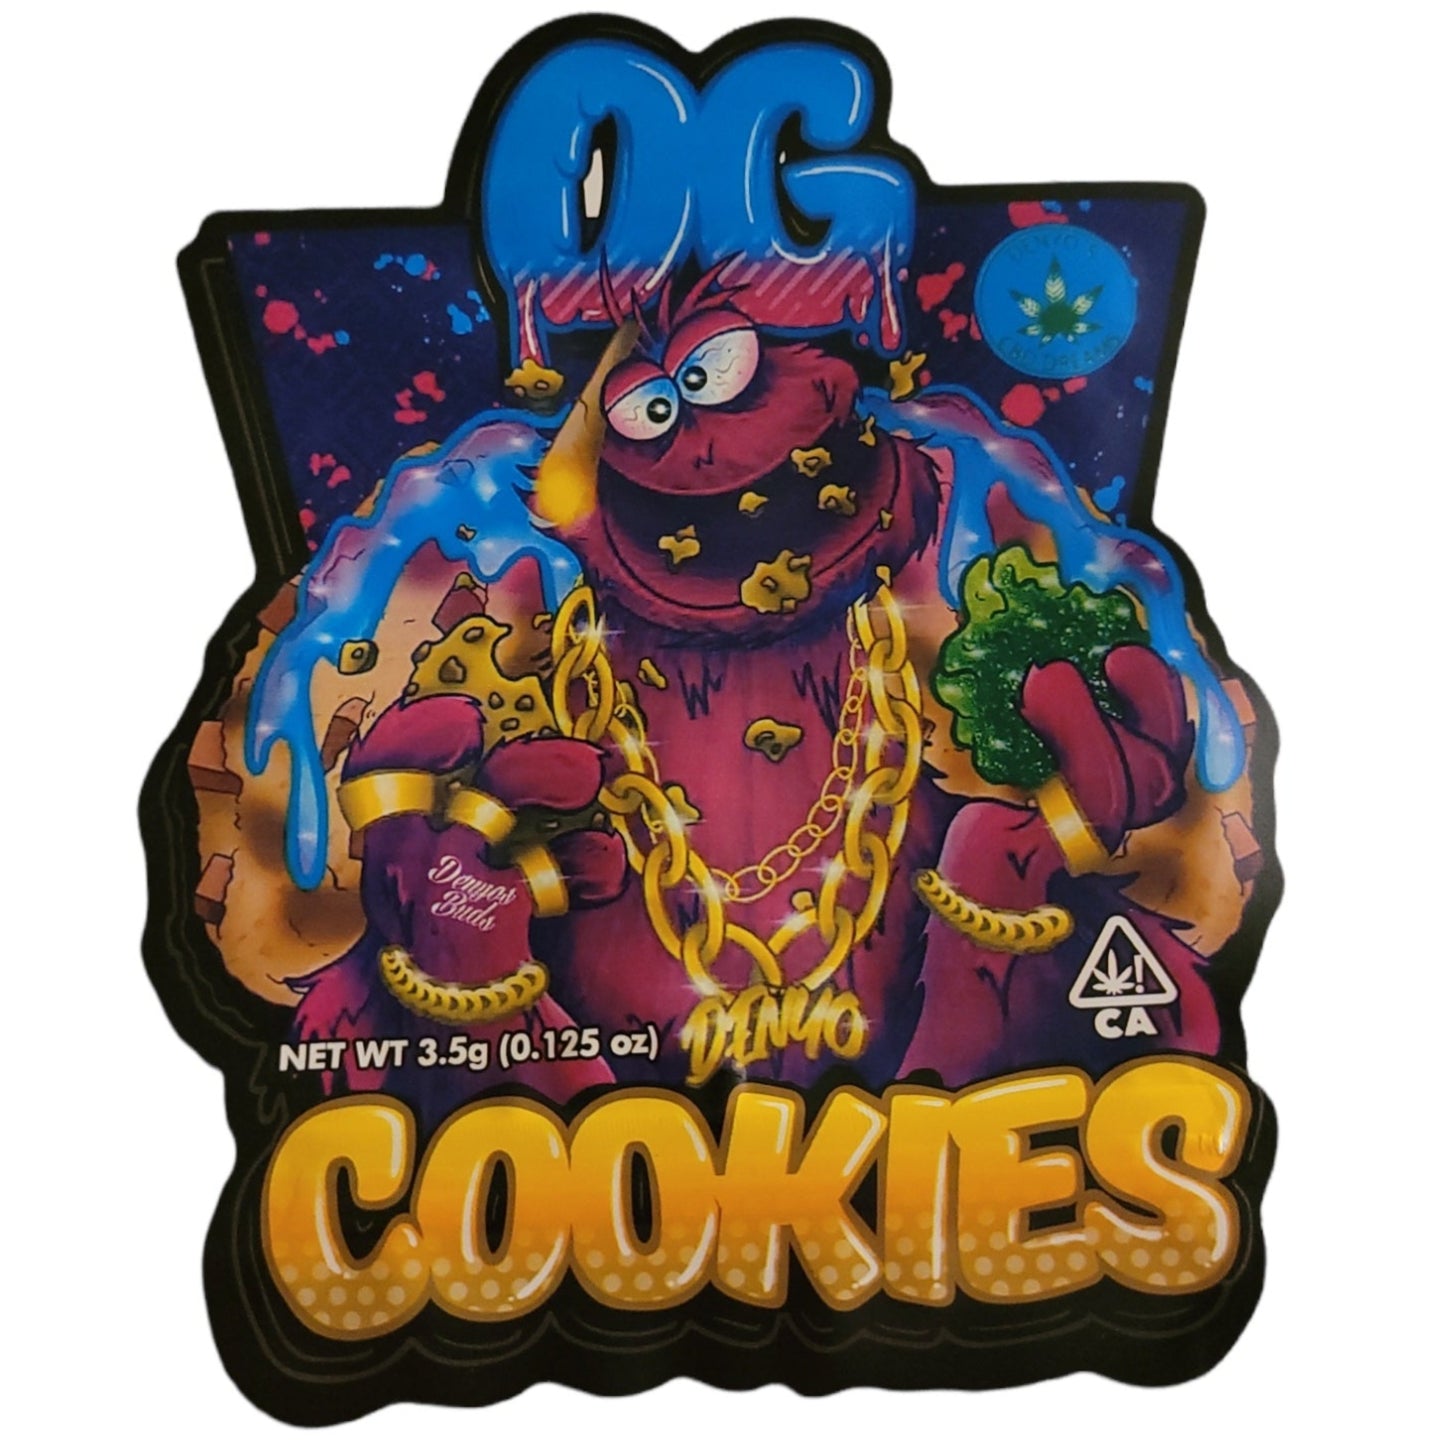 OG Cookies 3.5G Mylar Bags